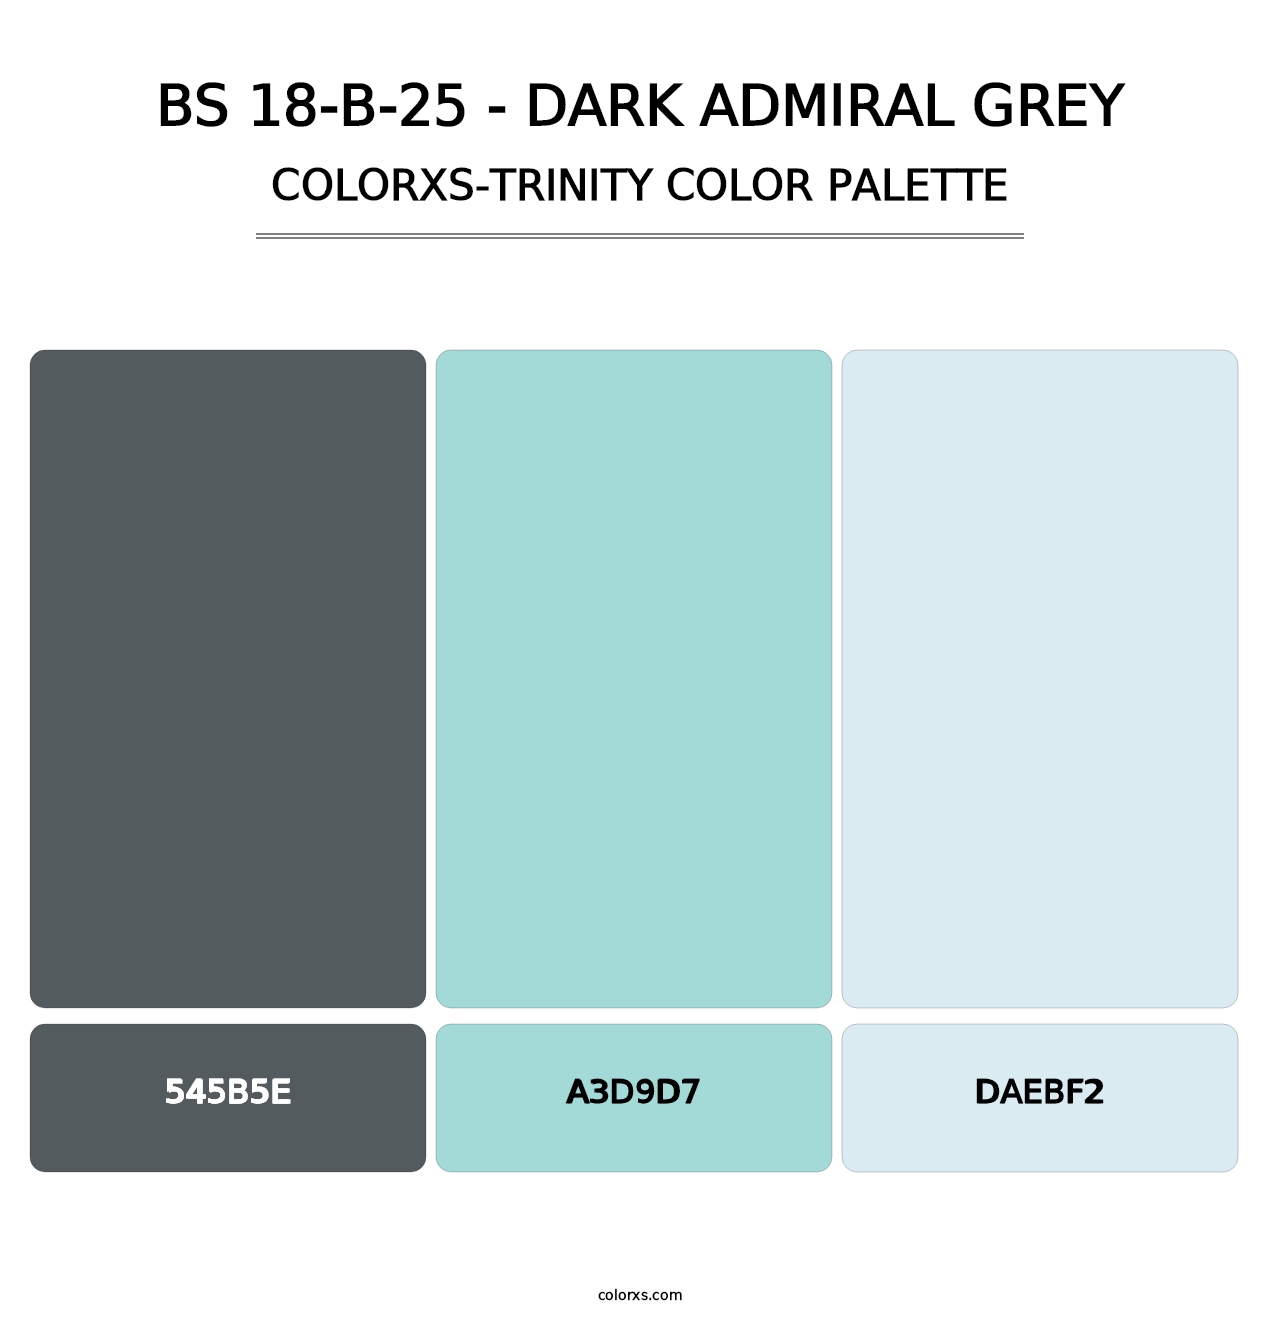 BS 18-B-25 - Dark Admiral Grey - Colorxs Trinity Palette